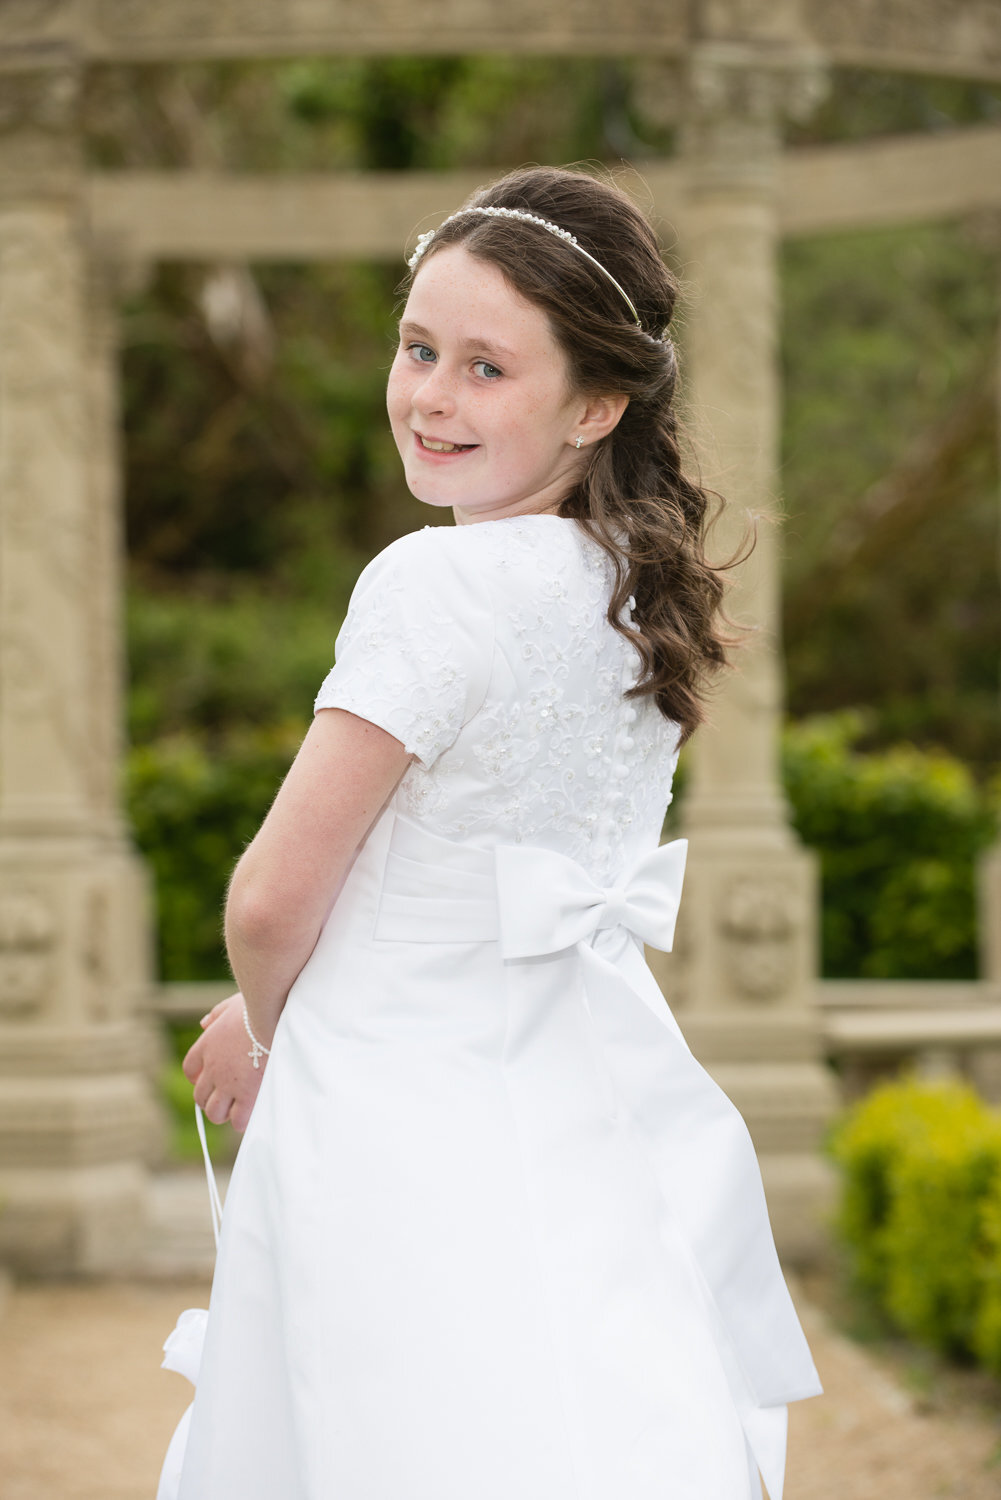 communion portrait of a girl wearing a white dress in the garden of ballyseede castle